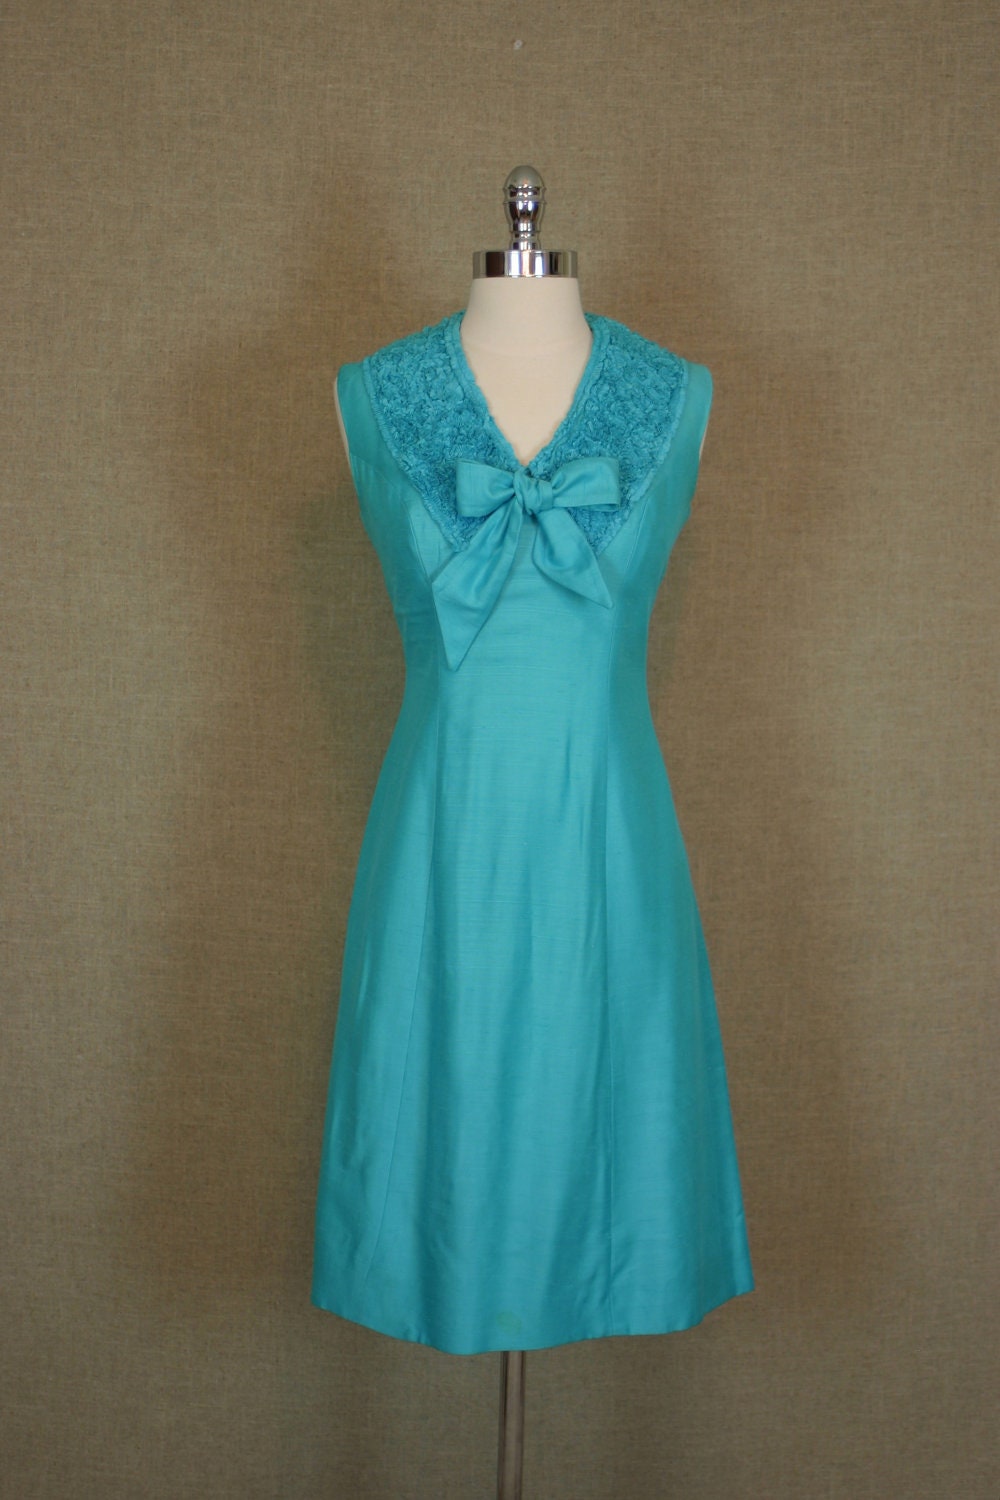 SALE 1960s Dress / Vintage Turquoise Raw Silk Sheath Dress | Etsy